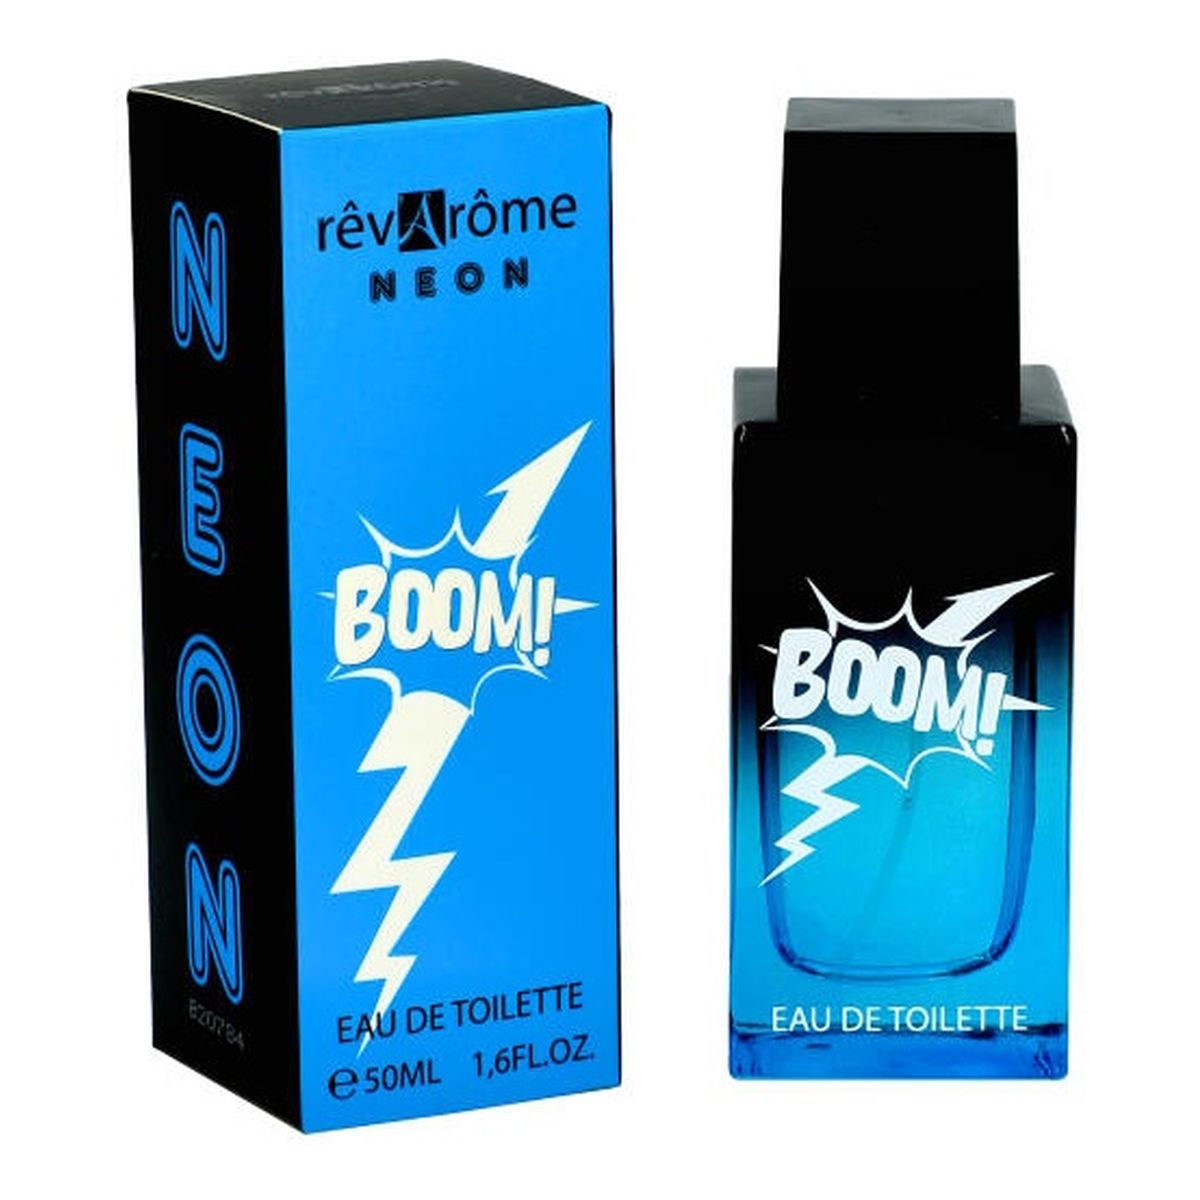 Revarome Neon Booml Woda toaletowa spray 50ml